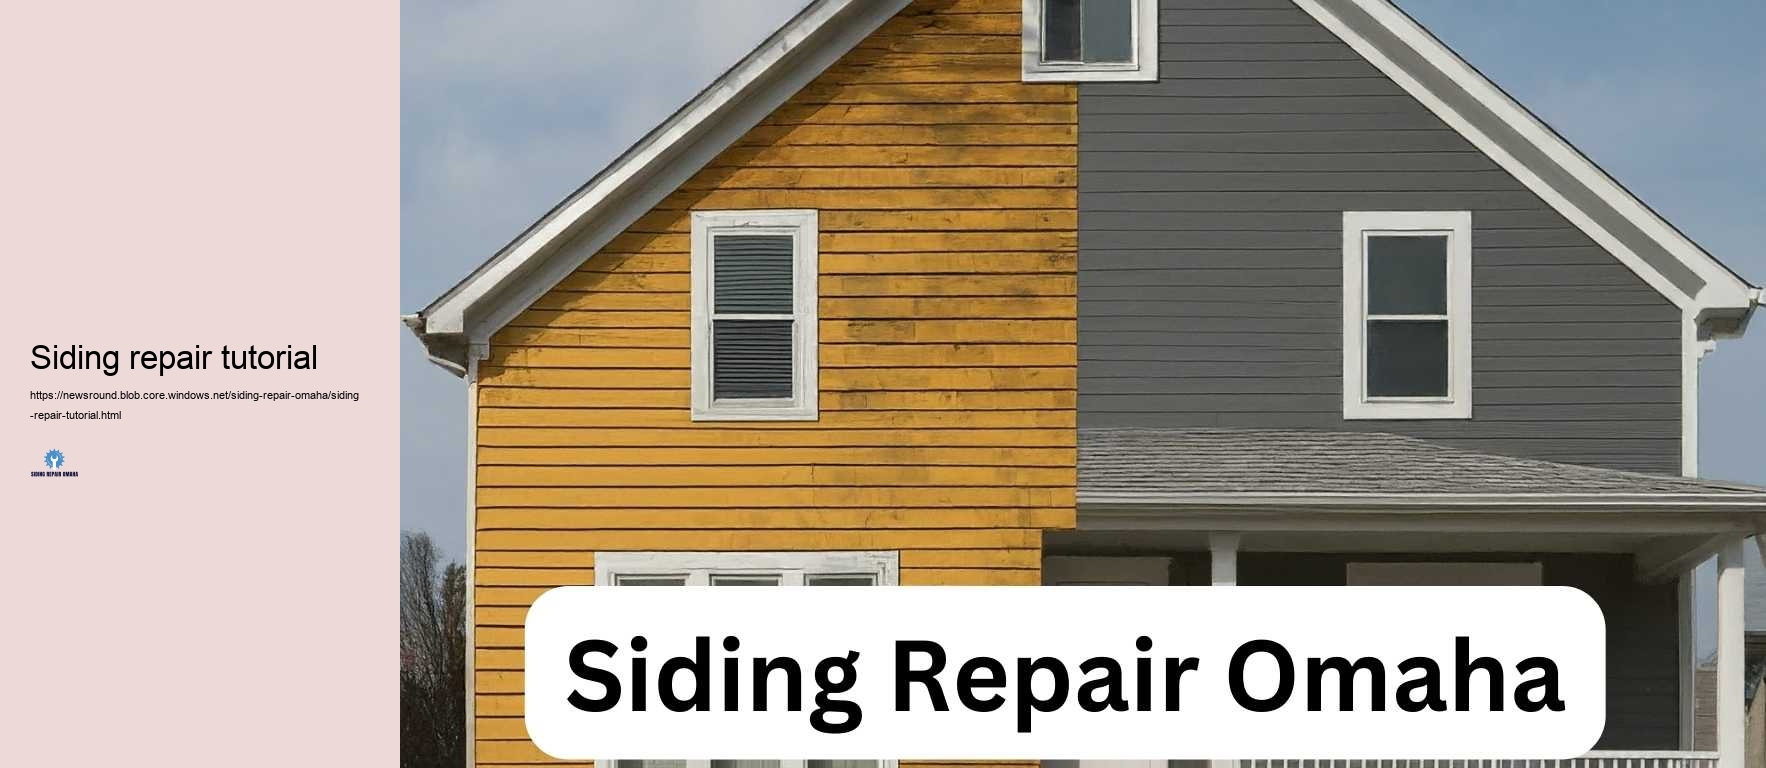 Siding repair tutorial